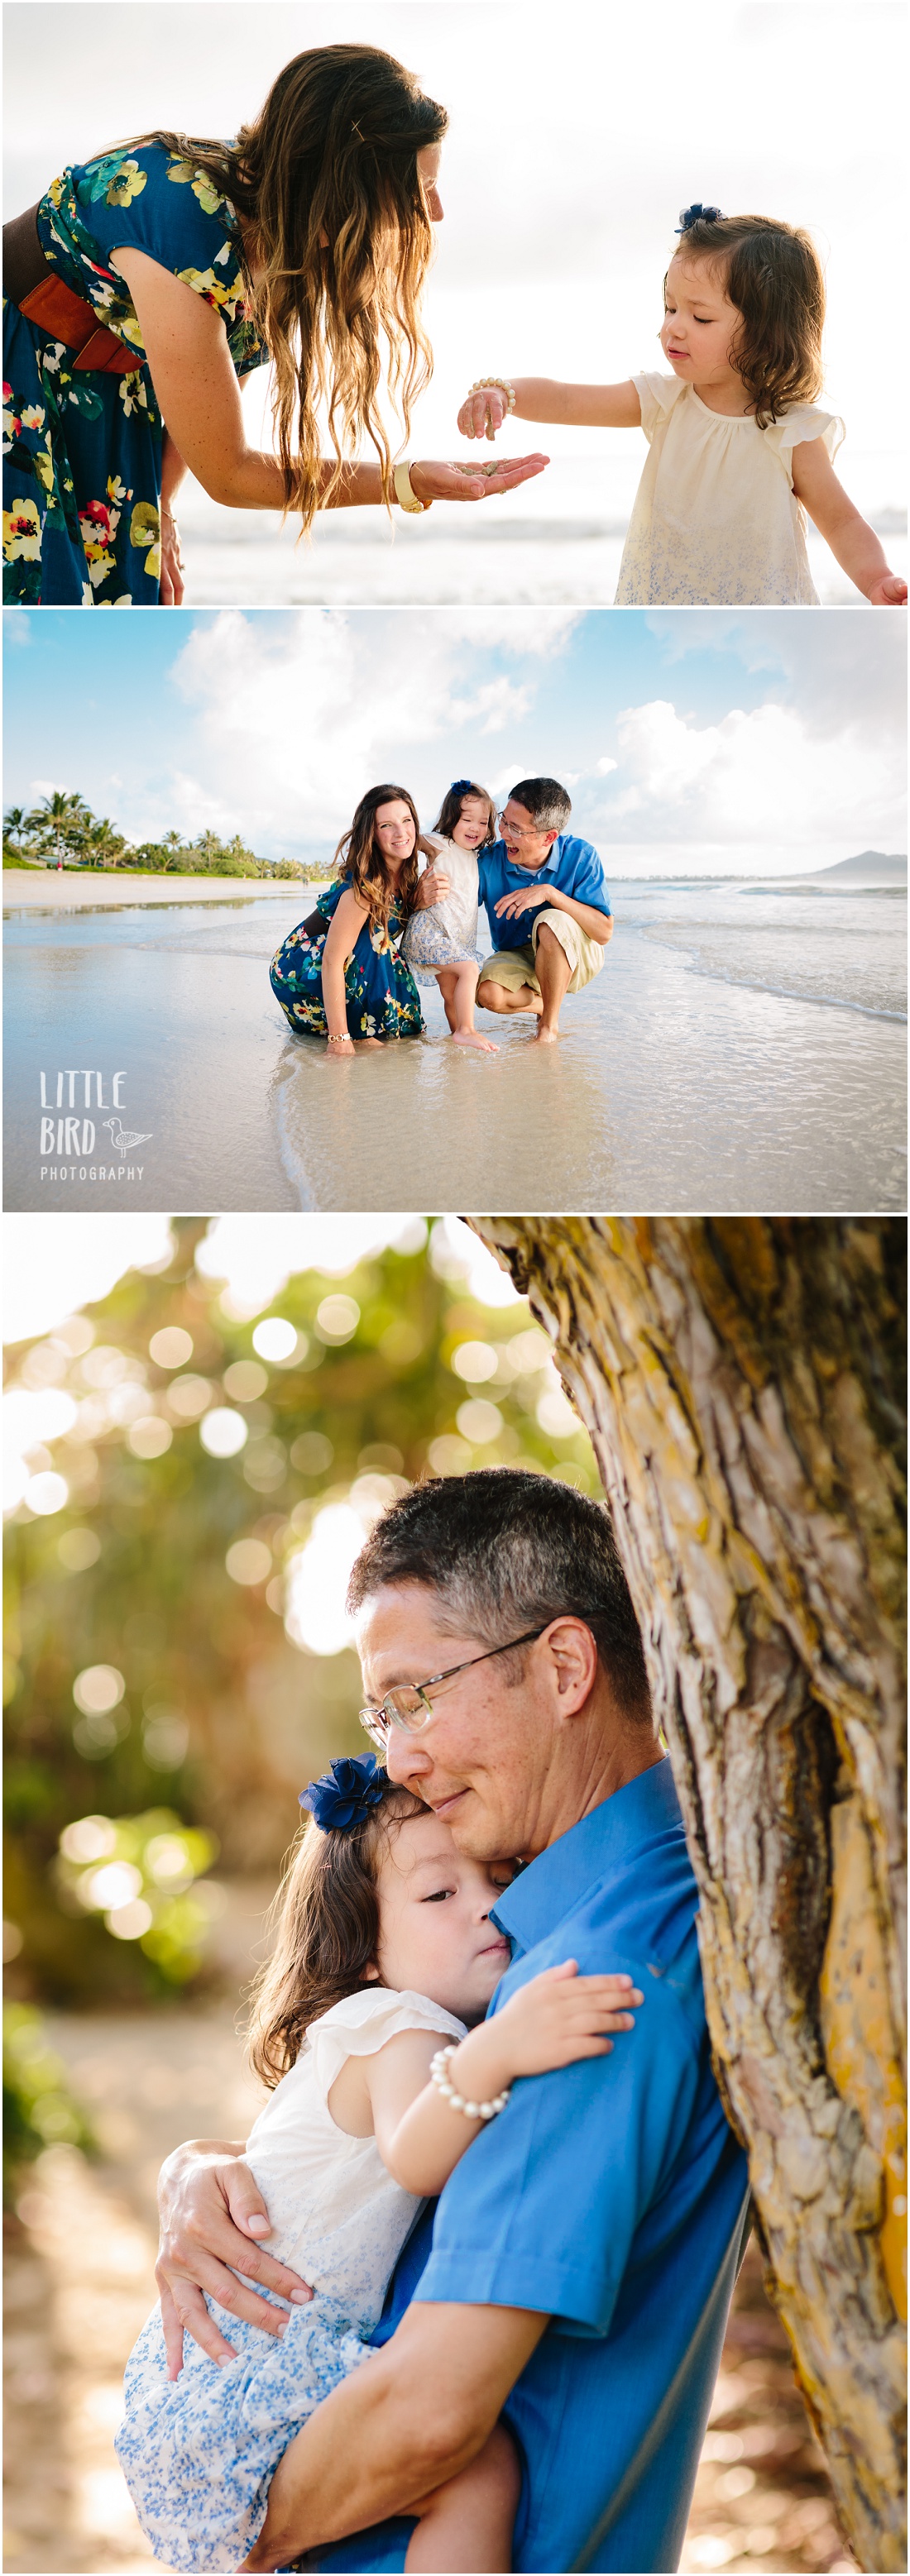 family playing at kailua beach oahu